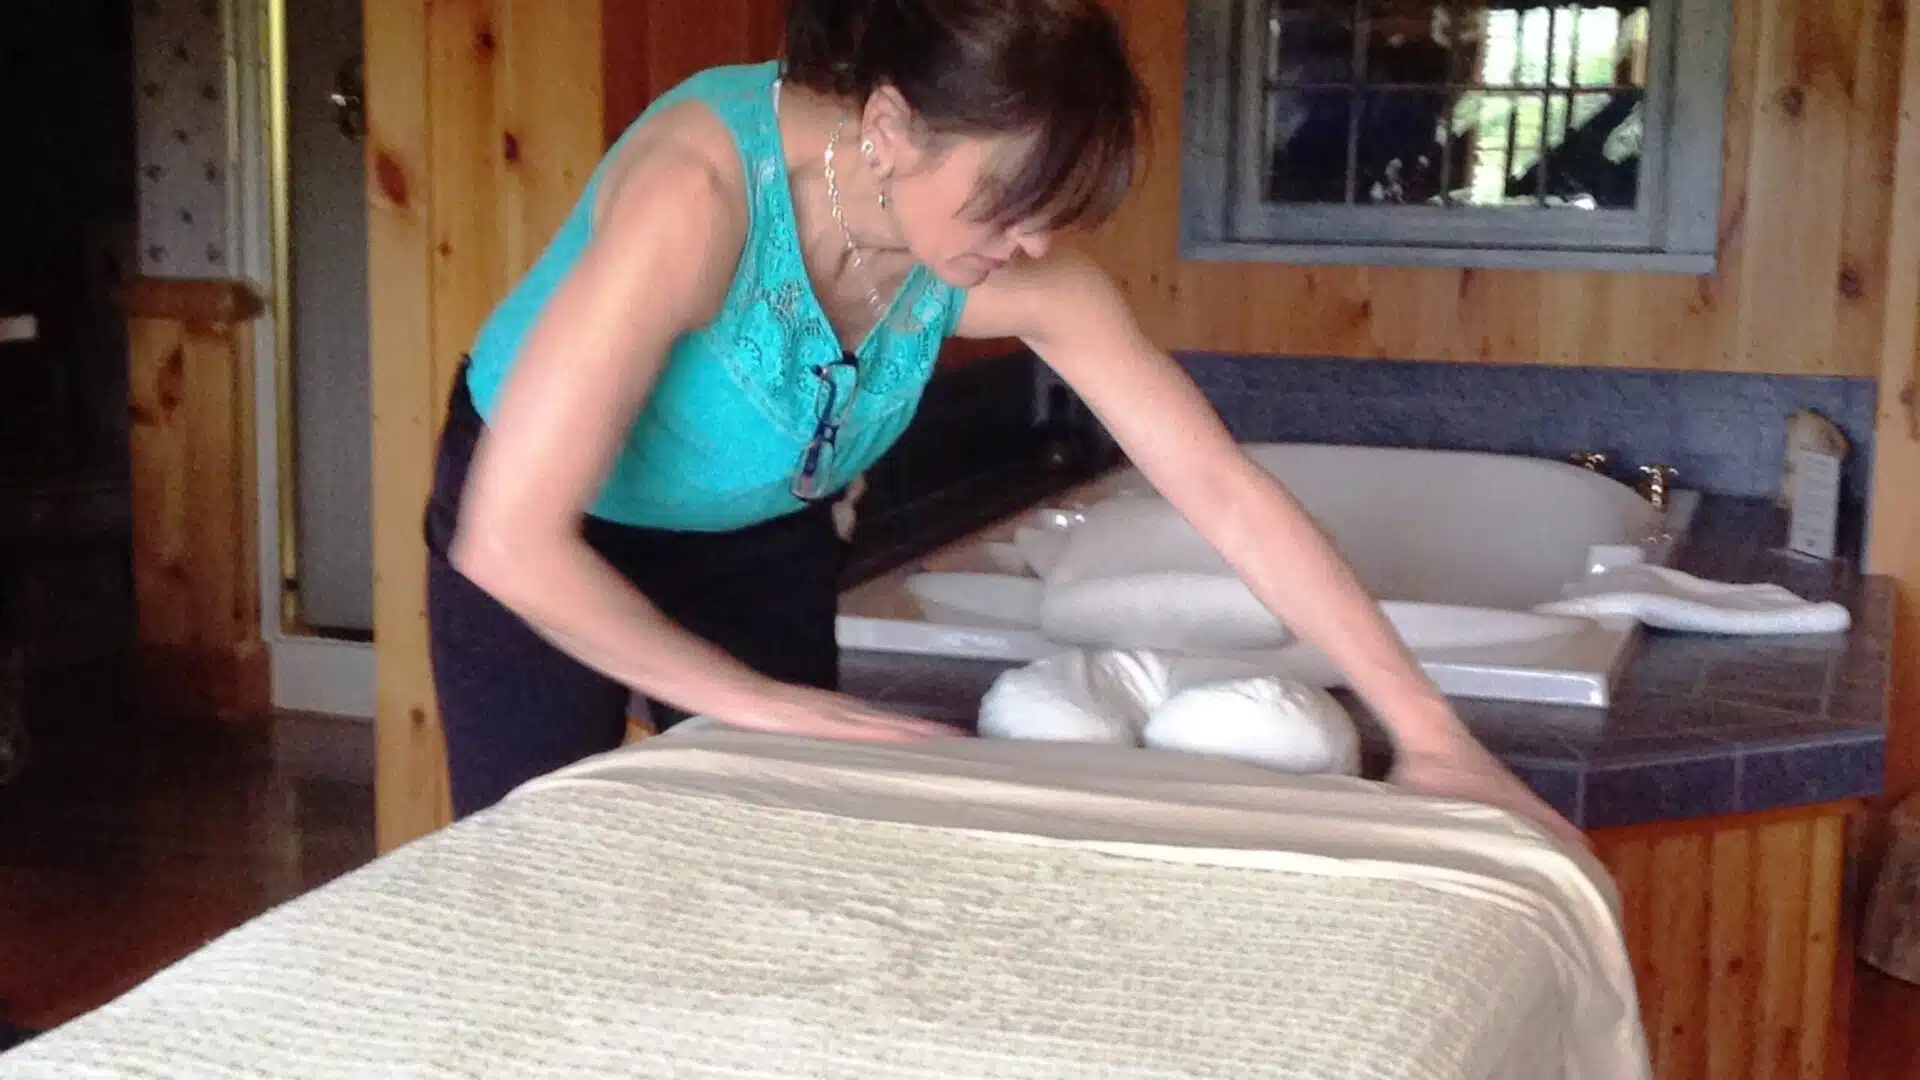 Massage therapist making up spa bed in Cedar Glen Guestroom|woman getting a massage